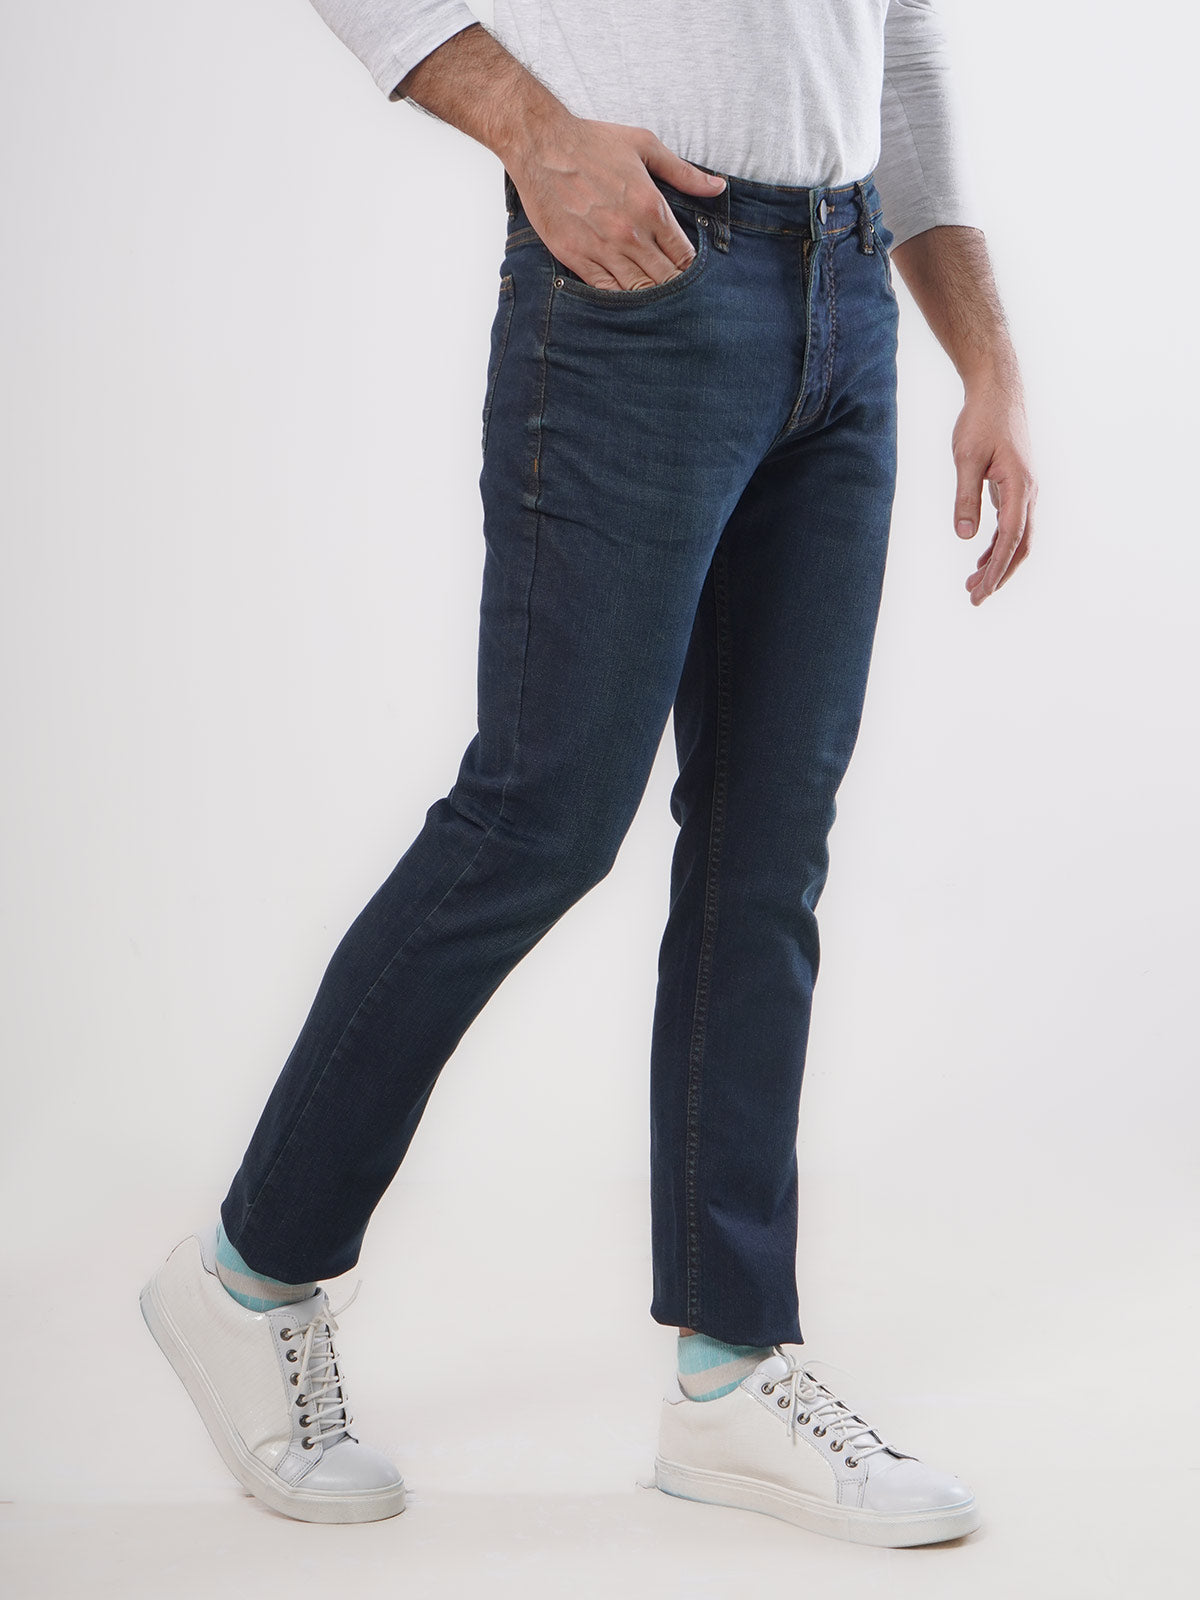 Navy Blue Denim Jeans 33